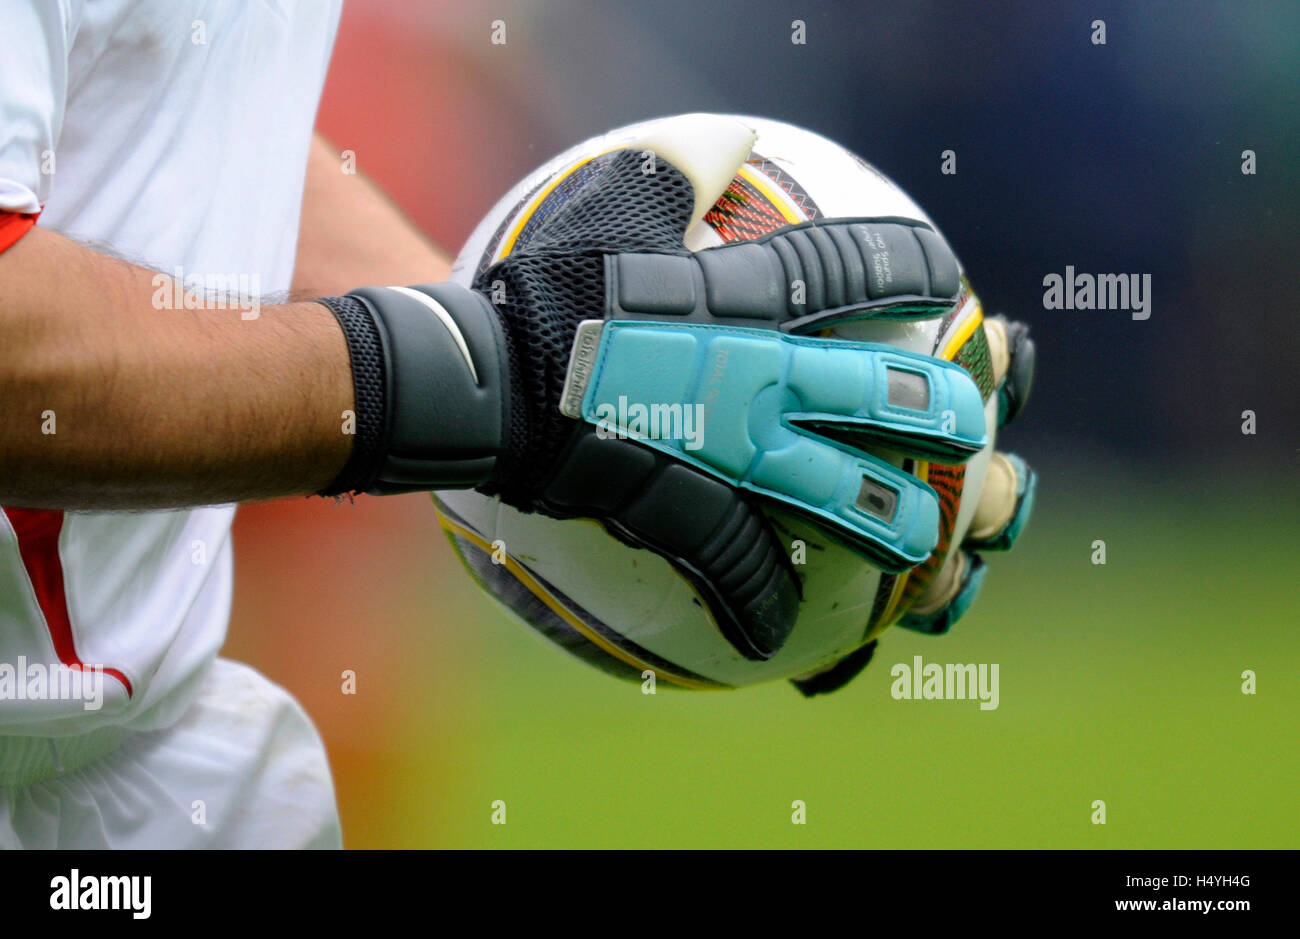 adidas world cup goalkeeper gloves 2018